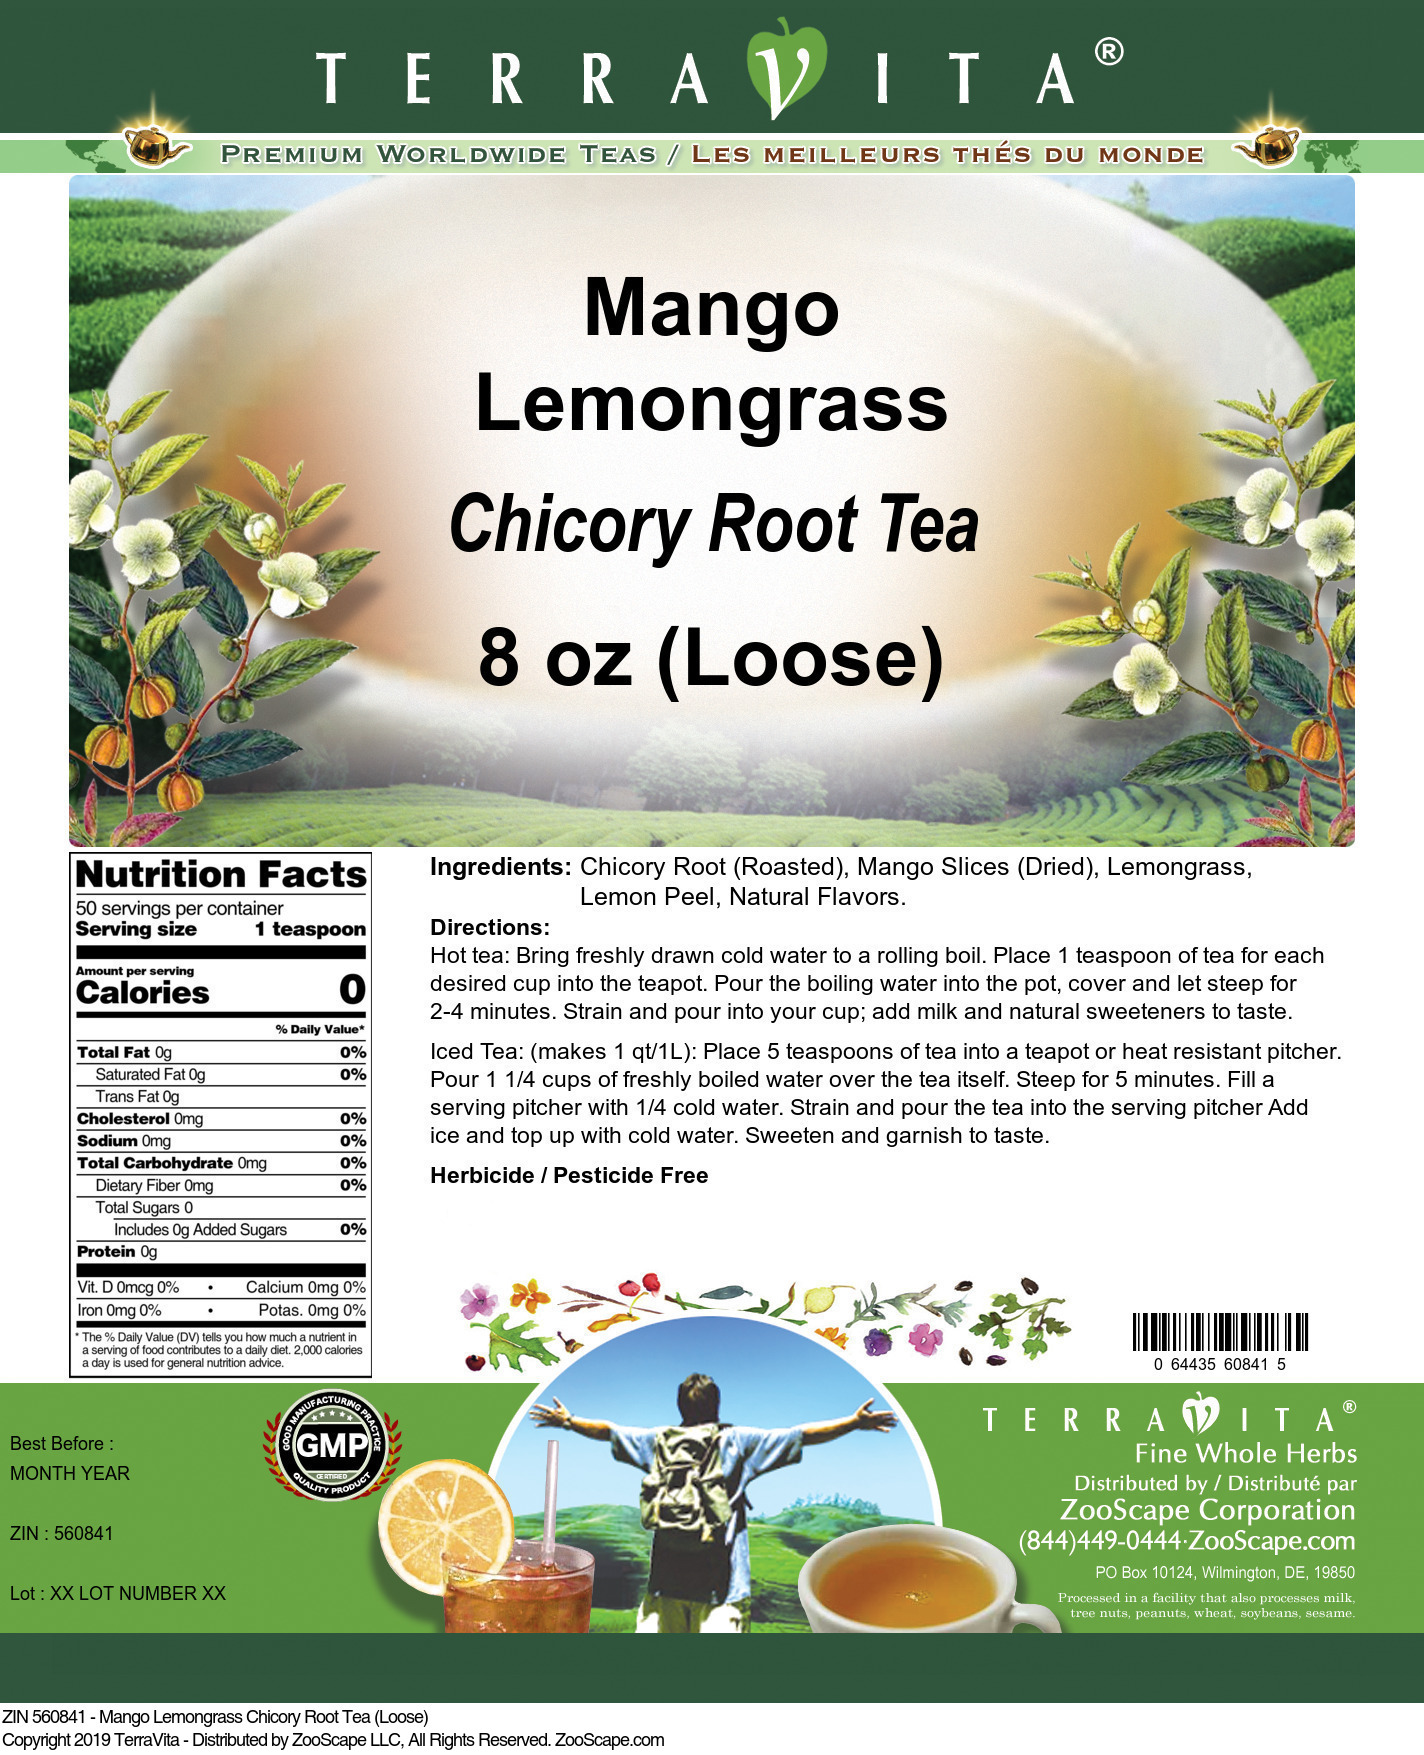 Mango Lemongrass Chicory Root Tea (Loose) - Label